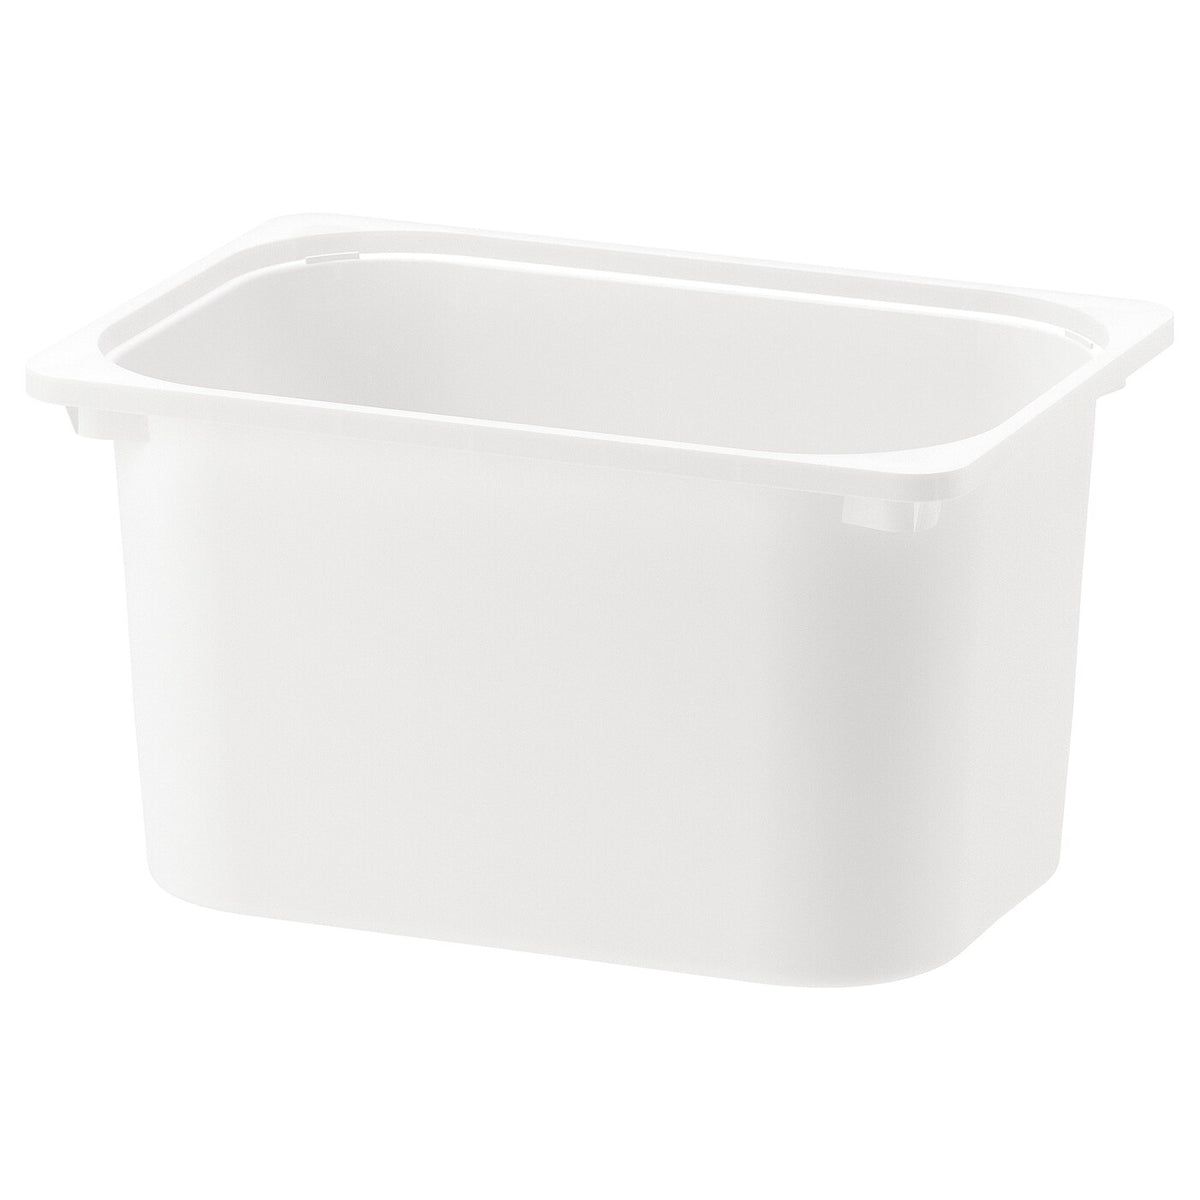 IKEA TROFAST storage box, medium white, 42x30x23 cm